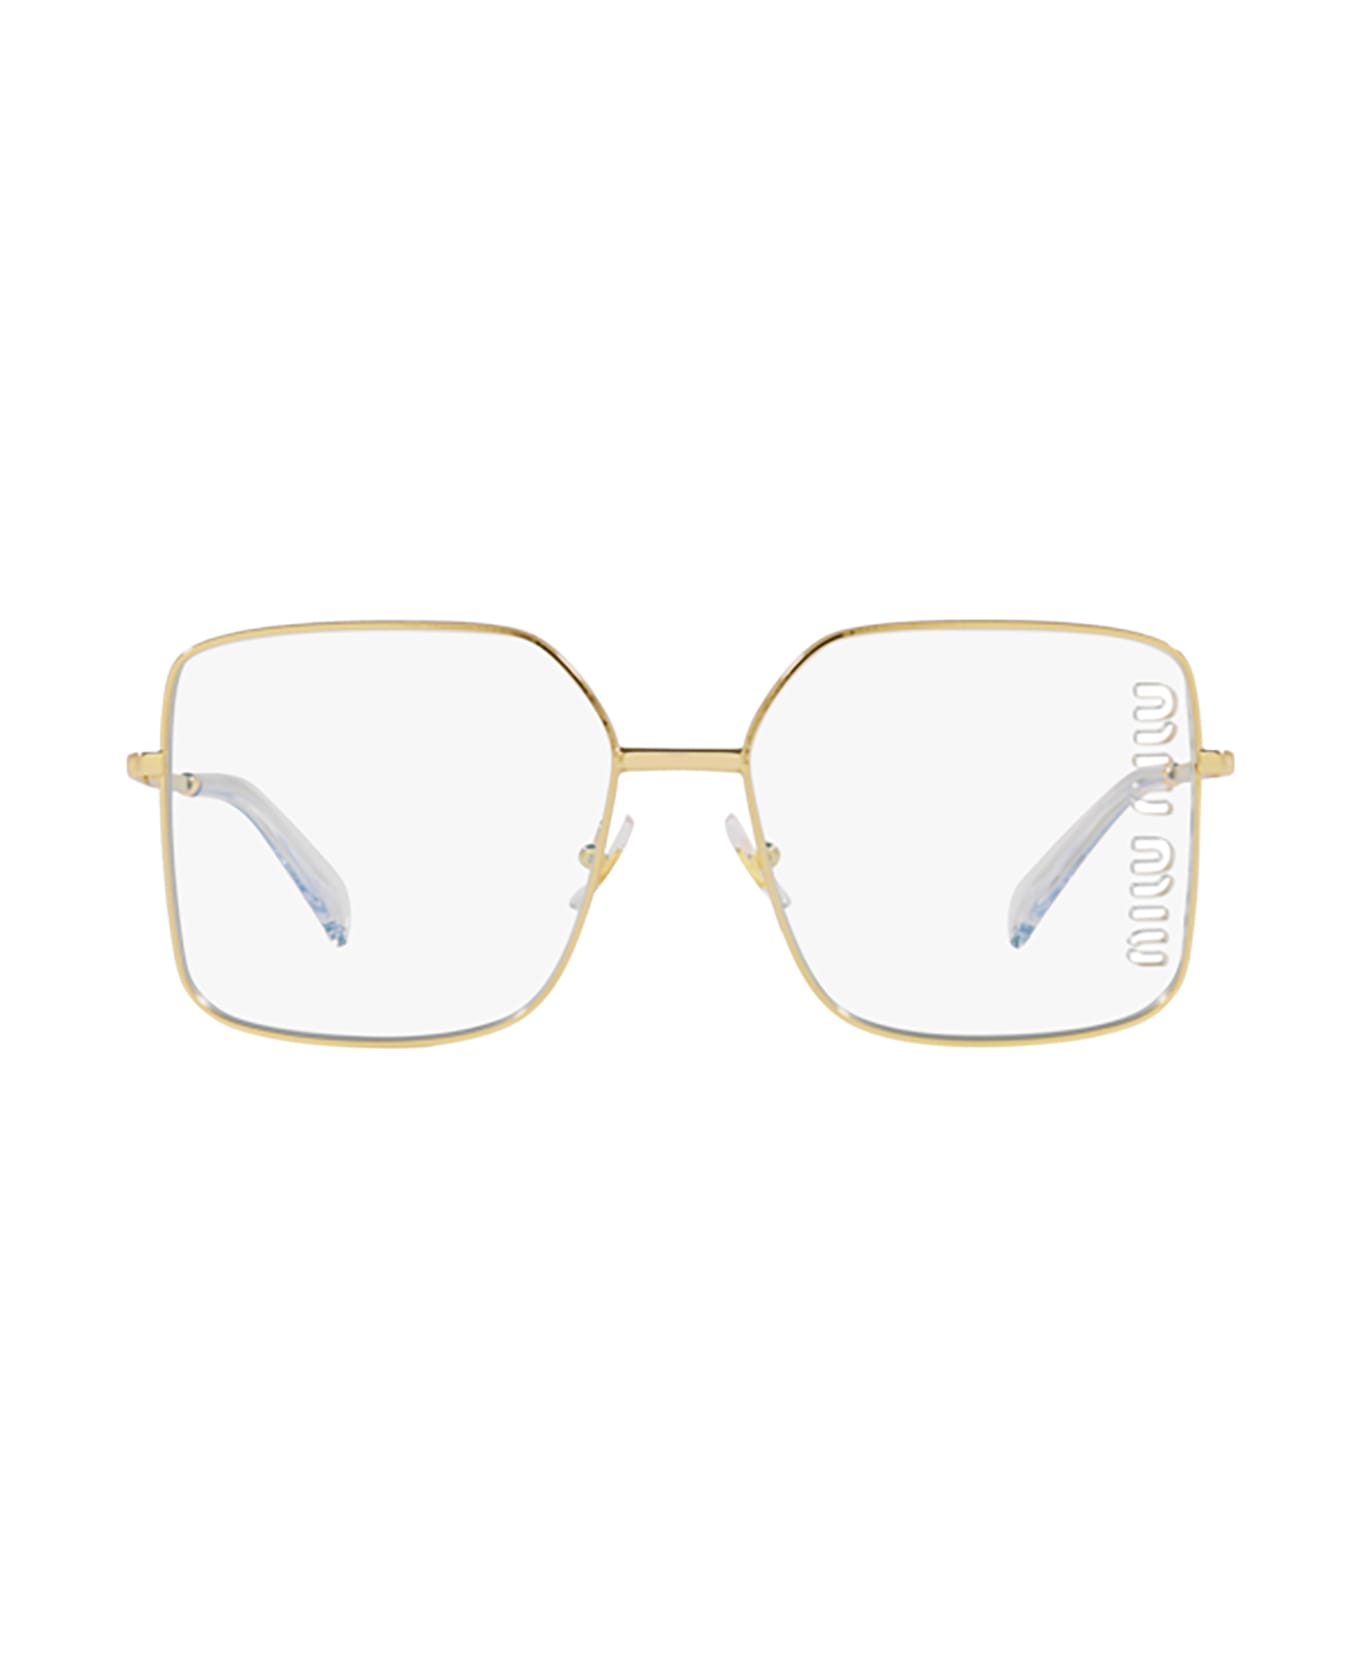 Miu Miu Eyewear Mu 51ys Gold Sunglasses - Gold